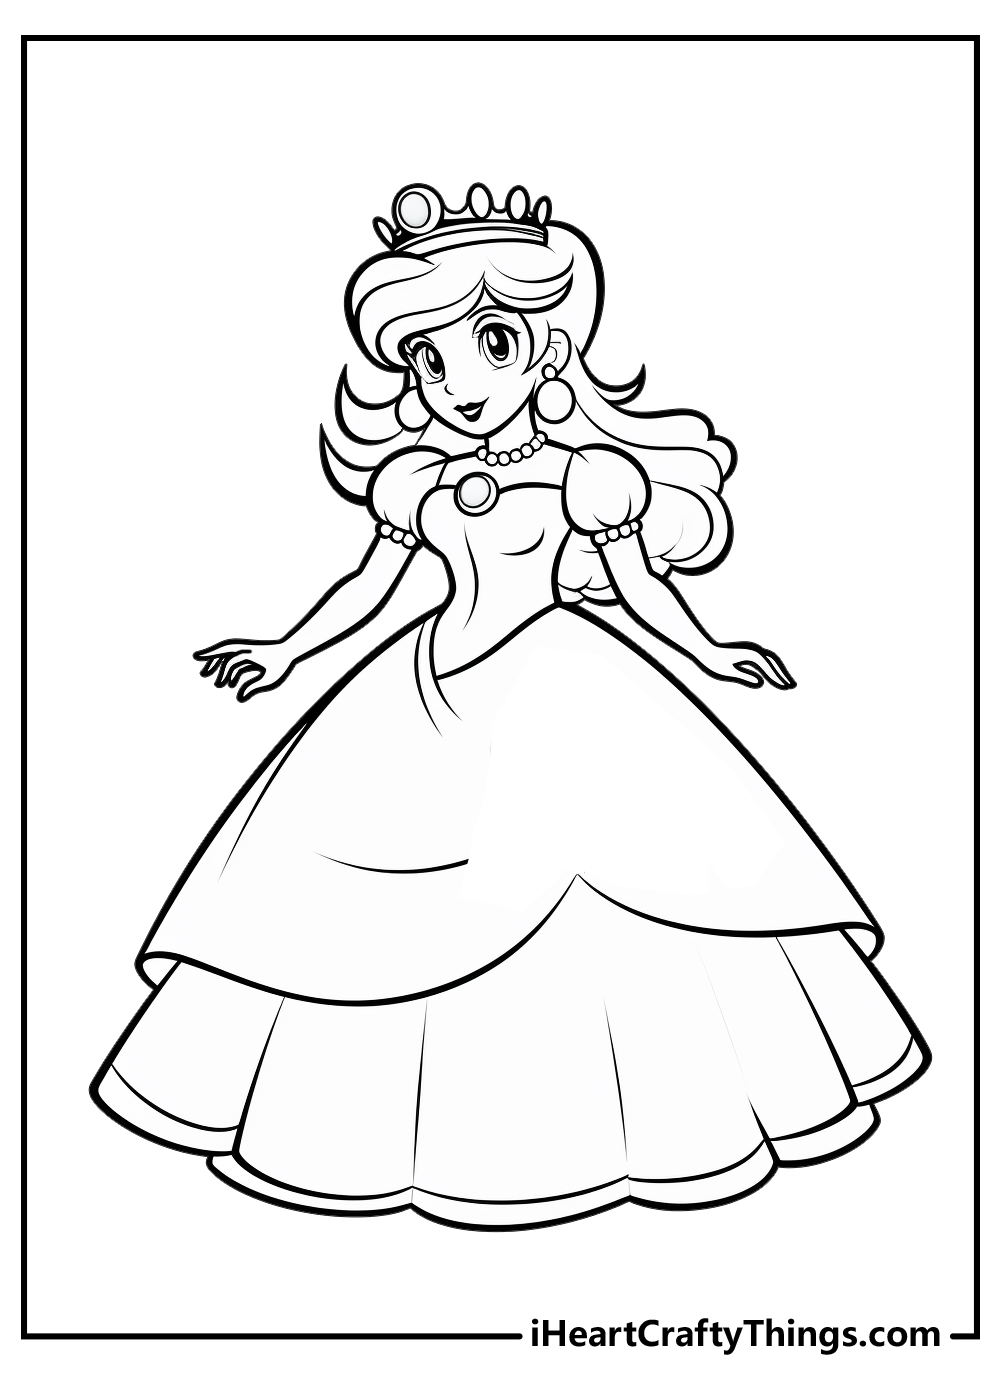 Princess Peach coloring page 